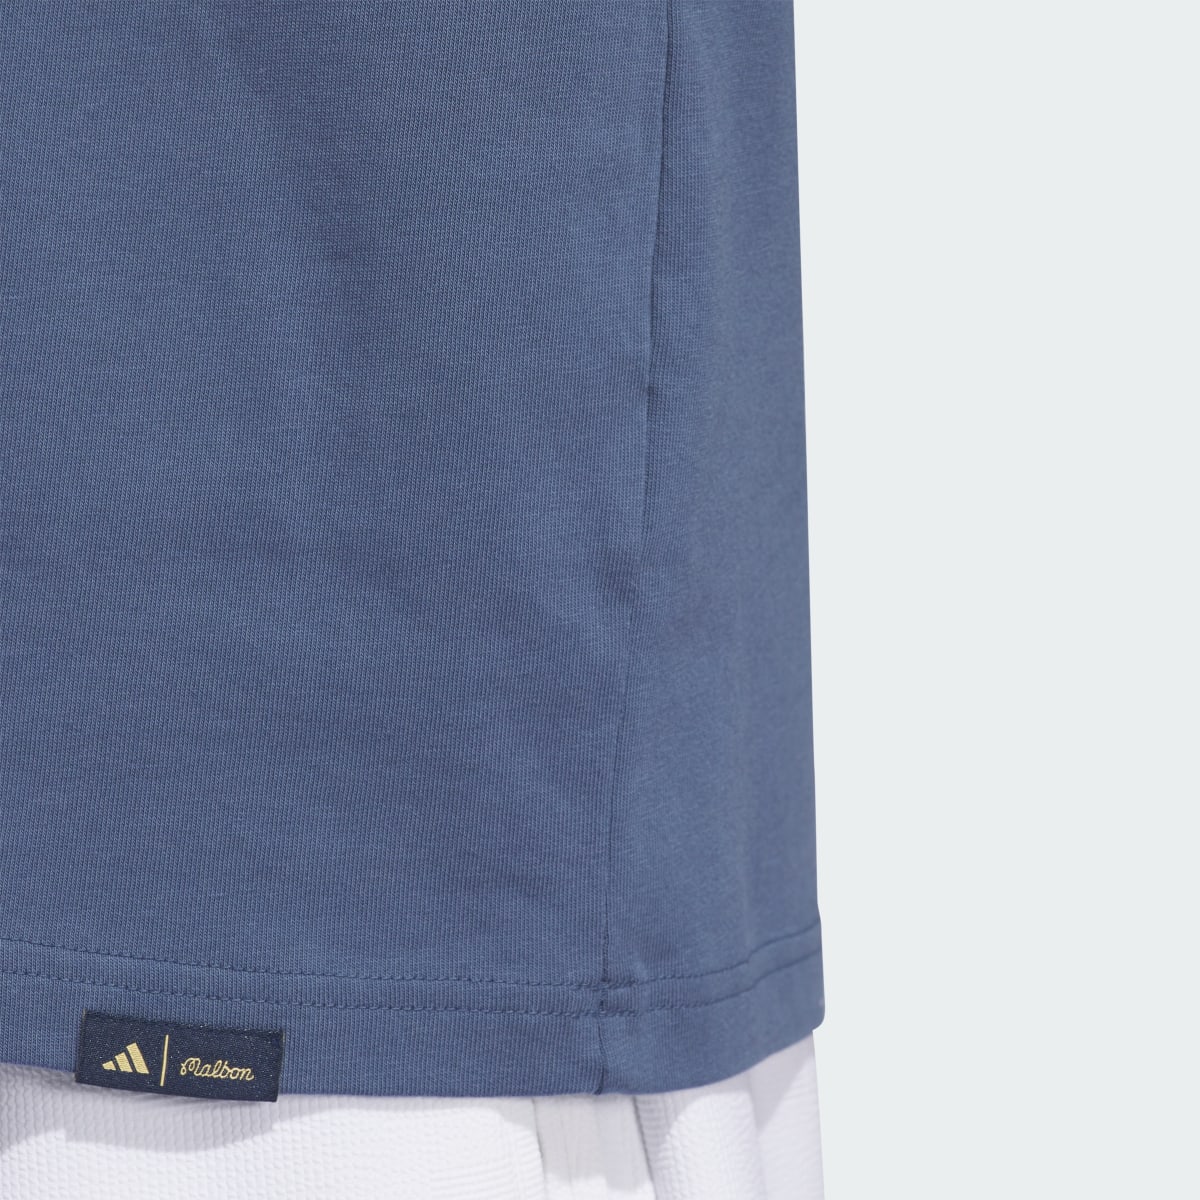 Adidas x Malbon Graphic T-Shirt. 8